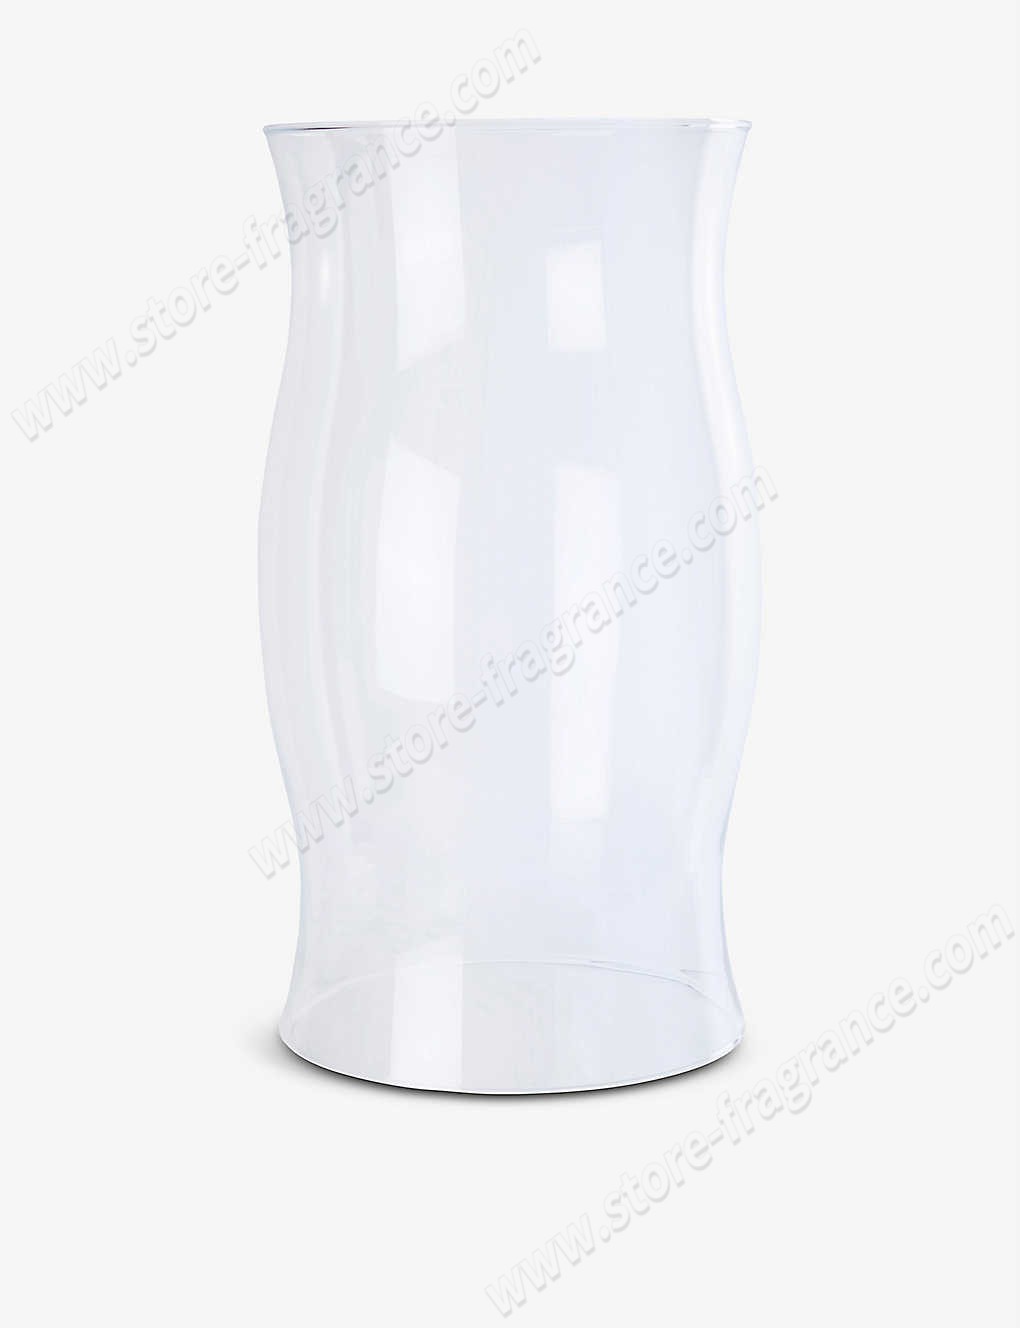 THE WHITE COMPANY/Crystal glass hurricane lantern 45cm ✿ Discount Store - -0